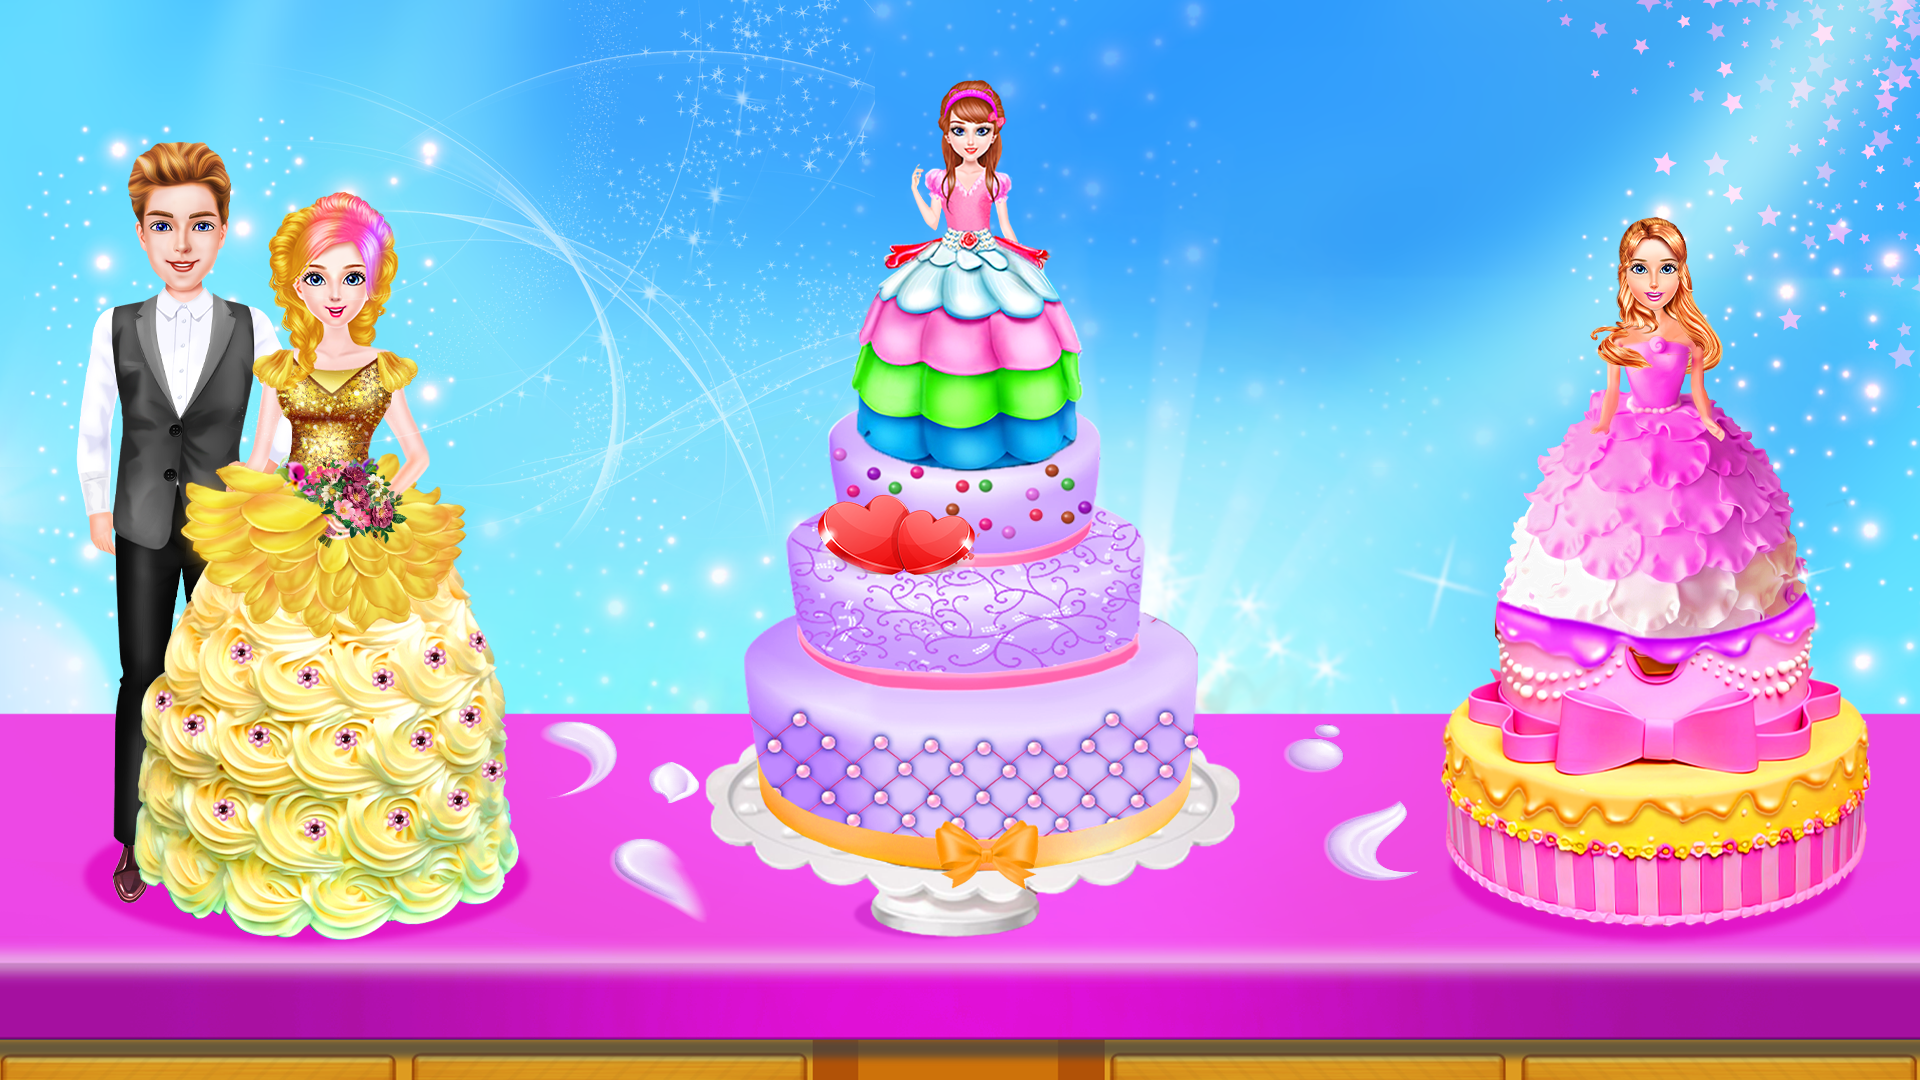 Cake Games: Fun Cupcake Maker Game for Android - Download | Bazaar